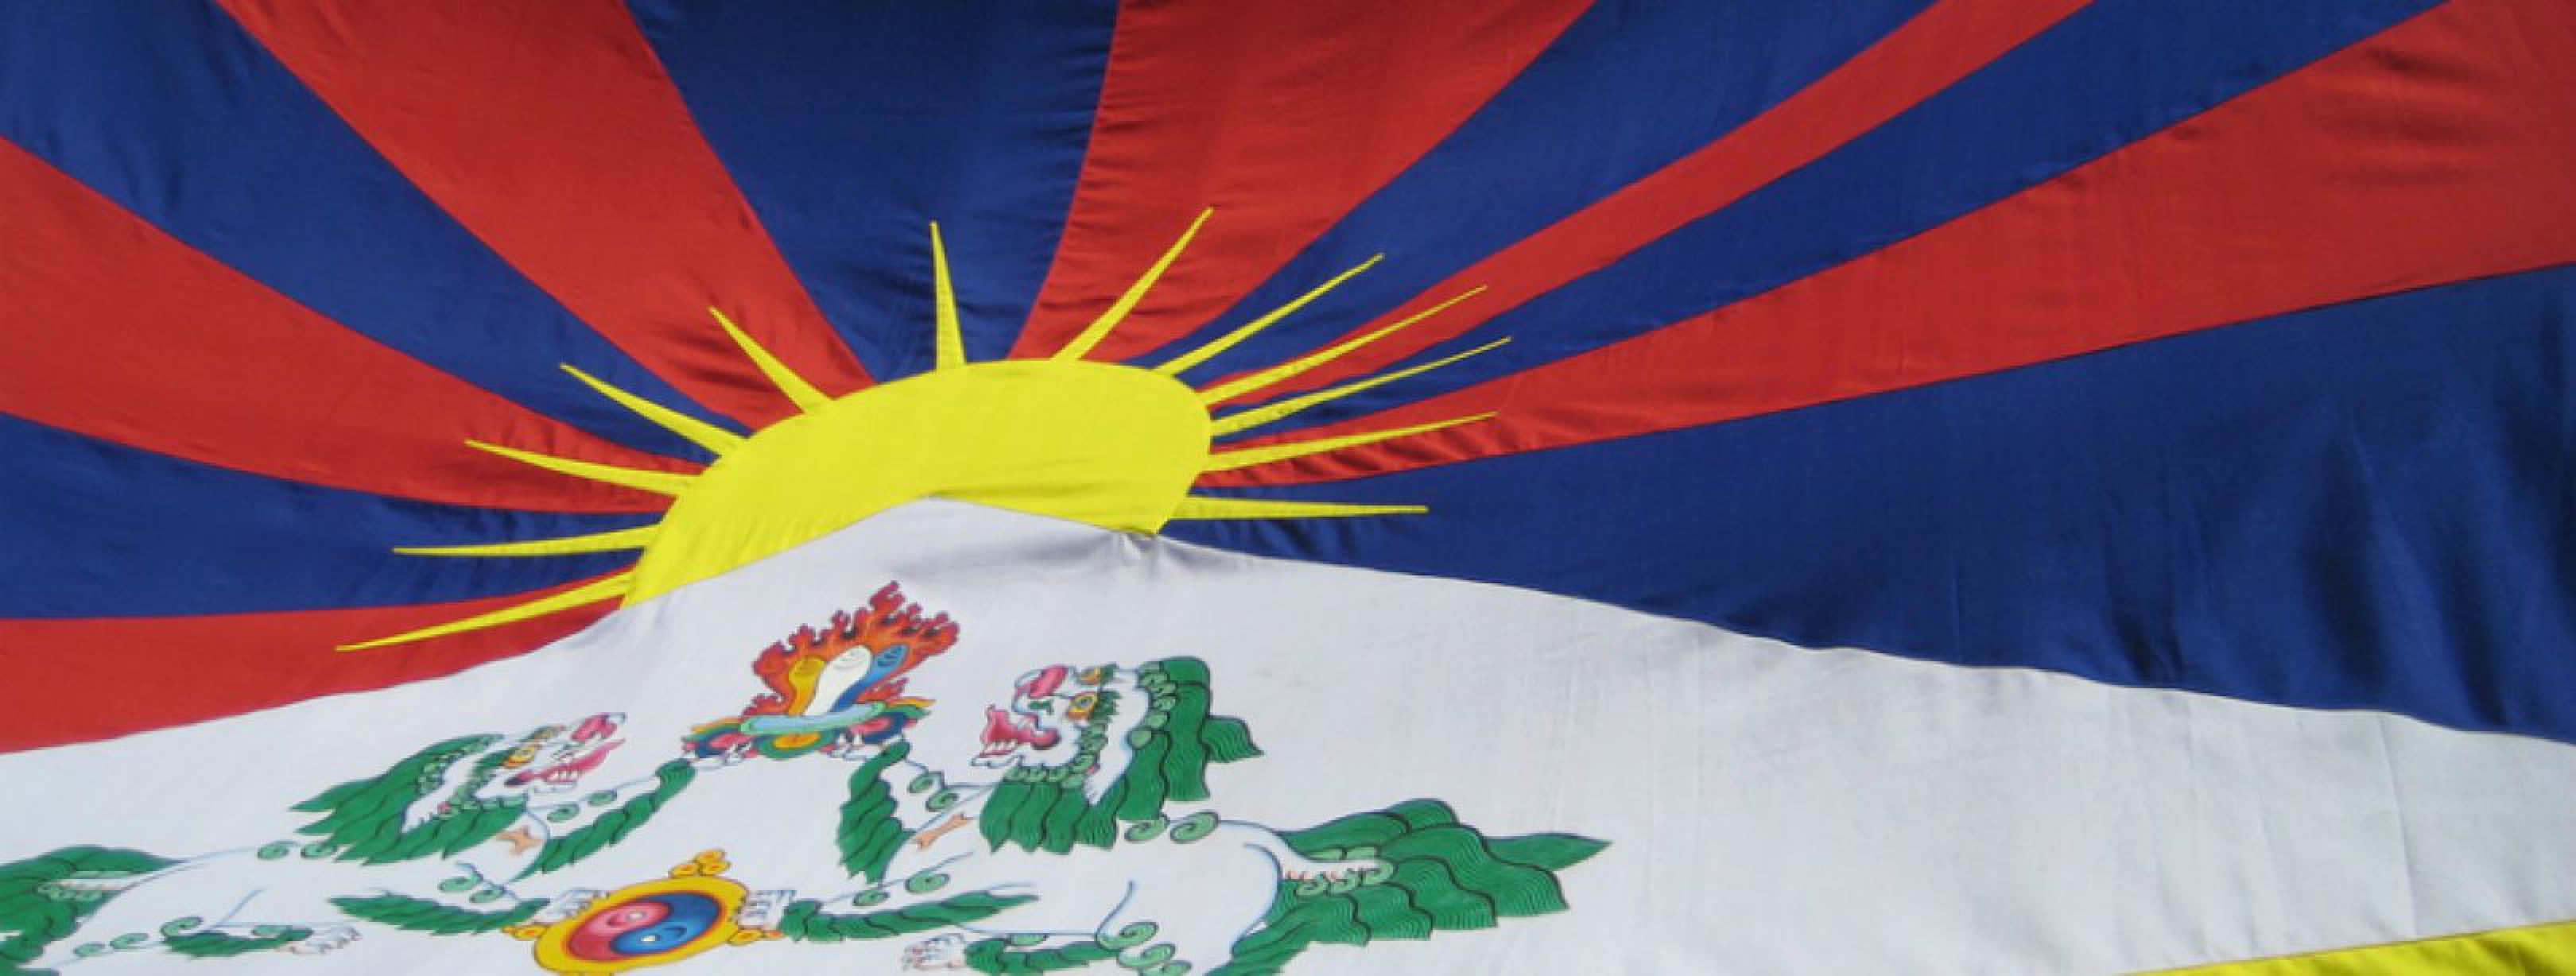 tibetan-flag